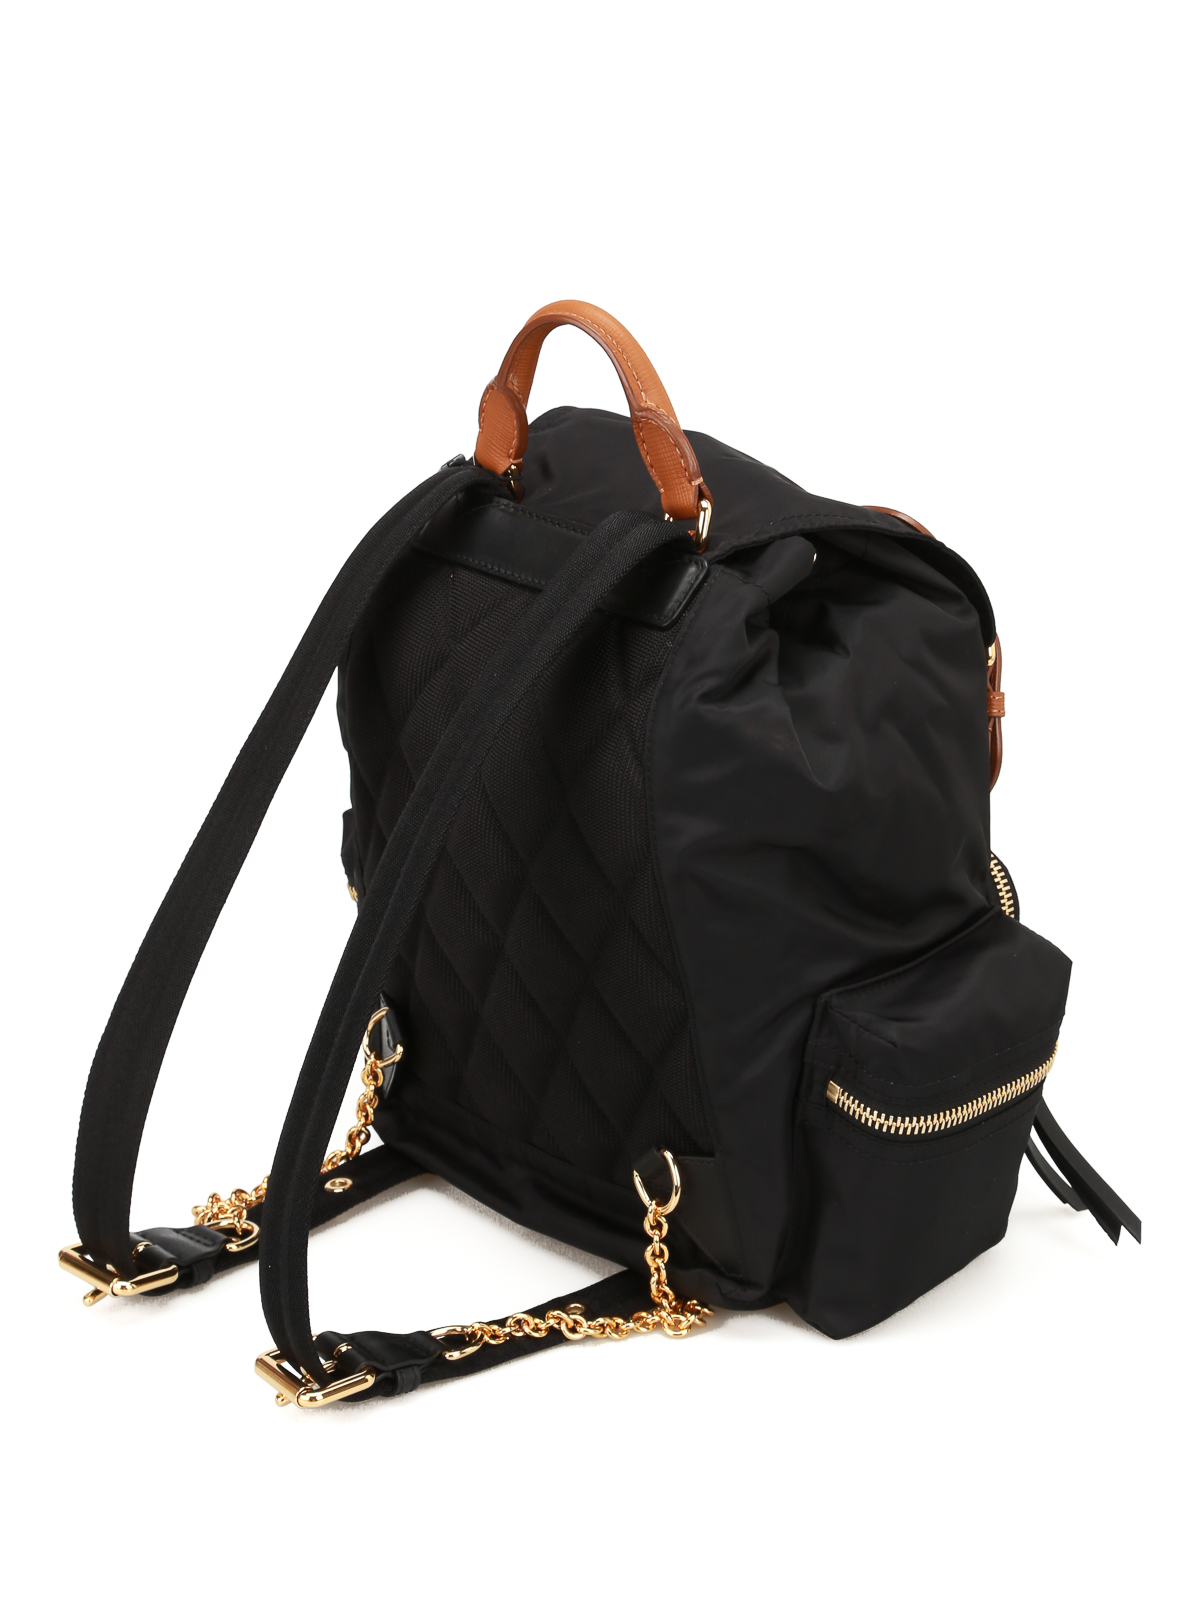 burberry medium rucksack backpack